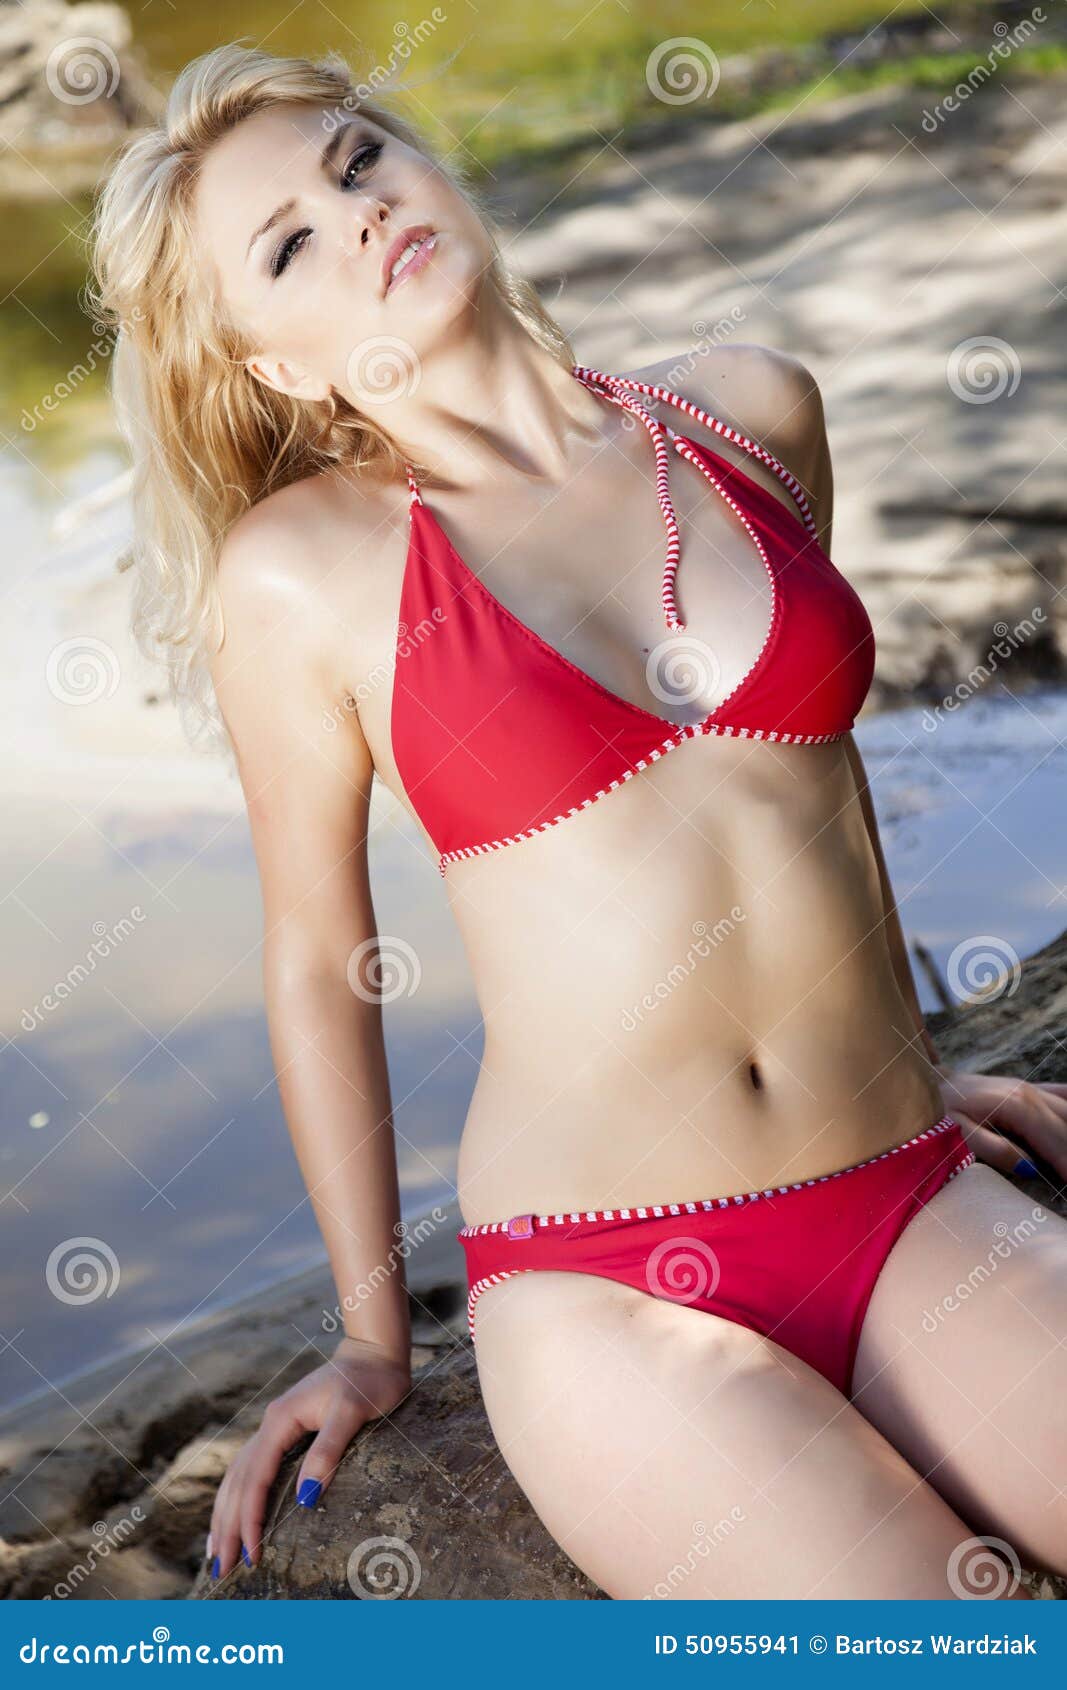 voyeur mature beach blond